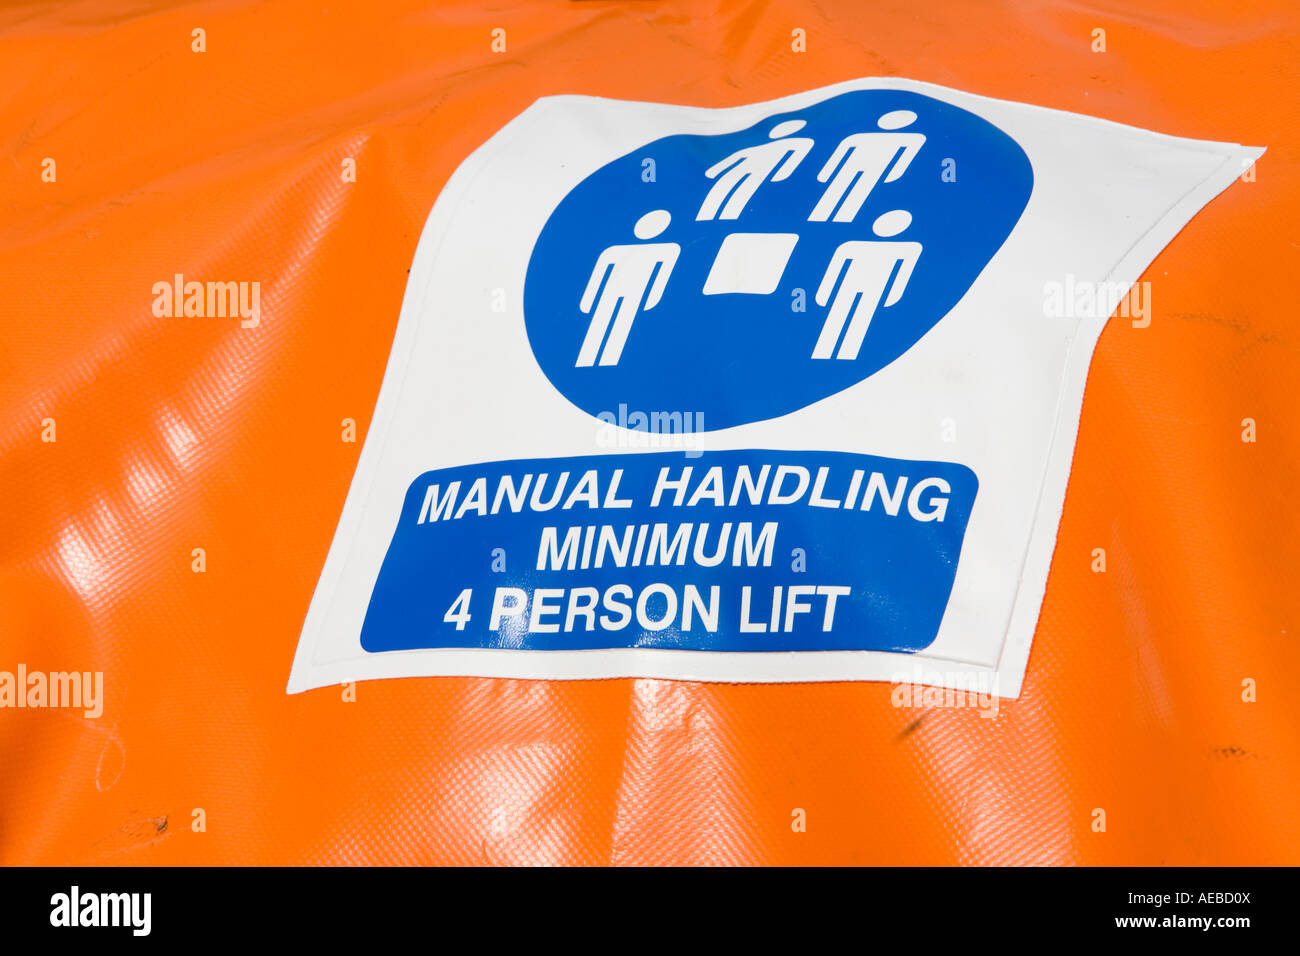 Manual handling notice on firemans equipment Stock Photo